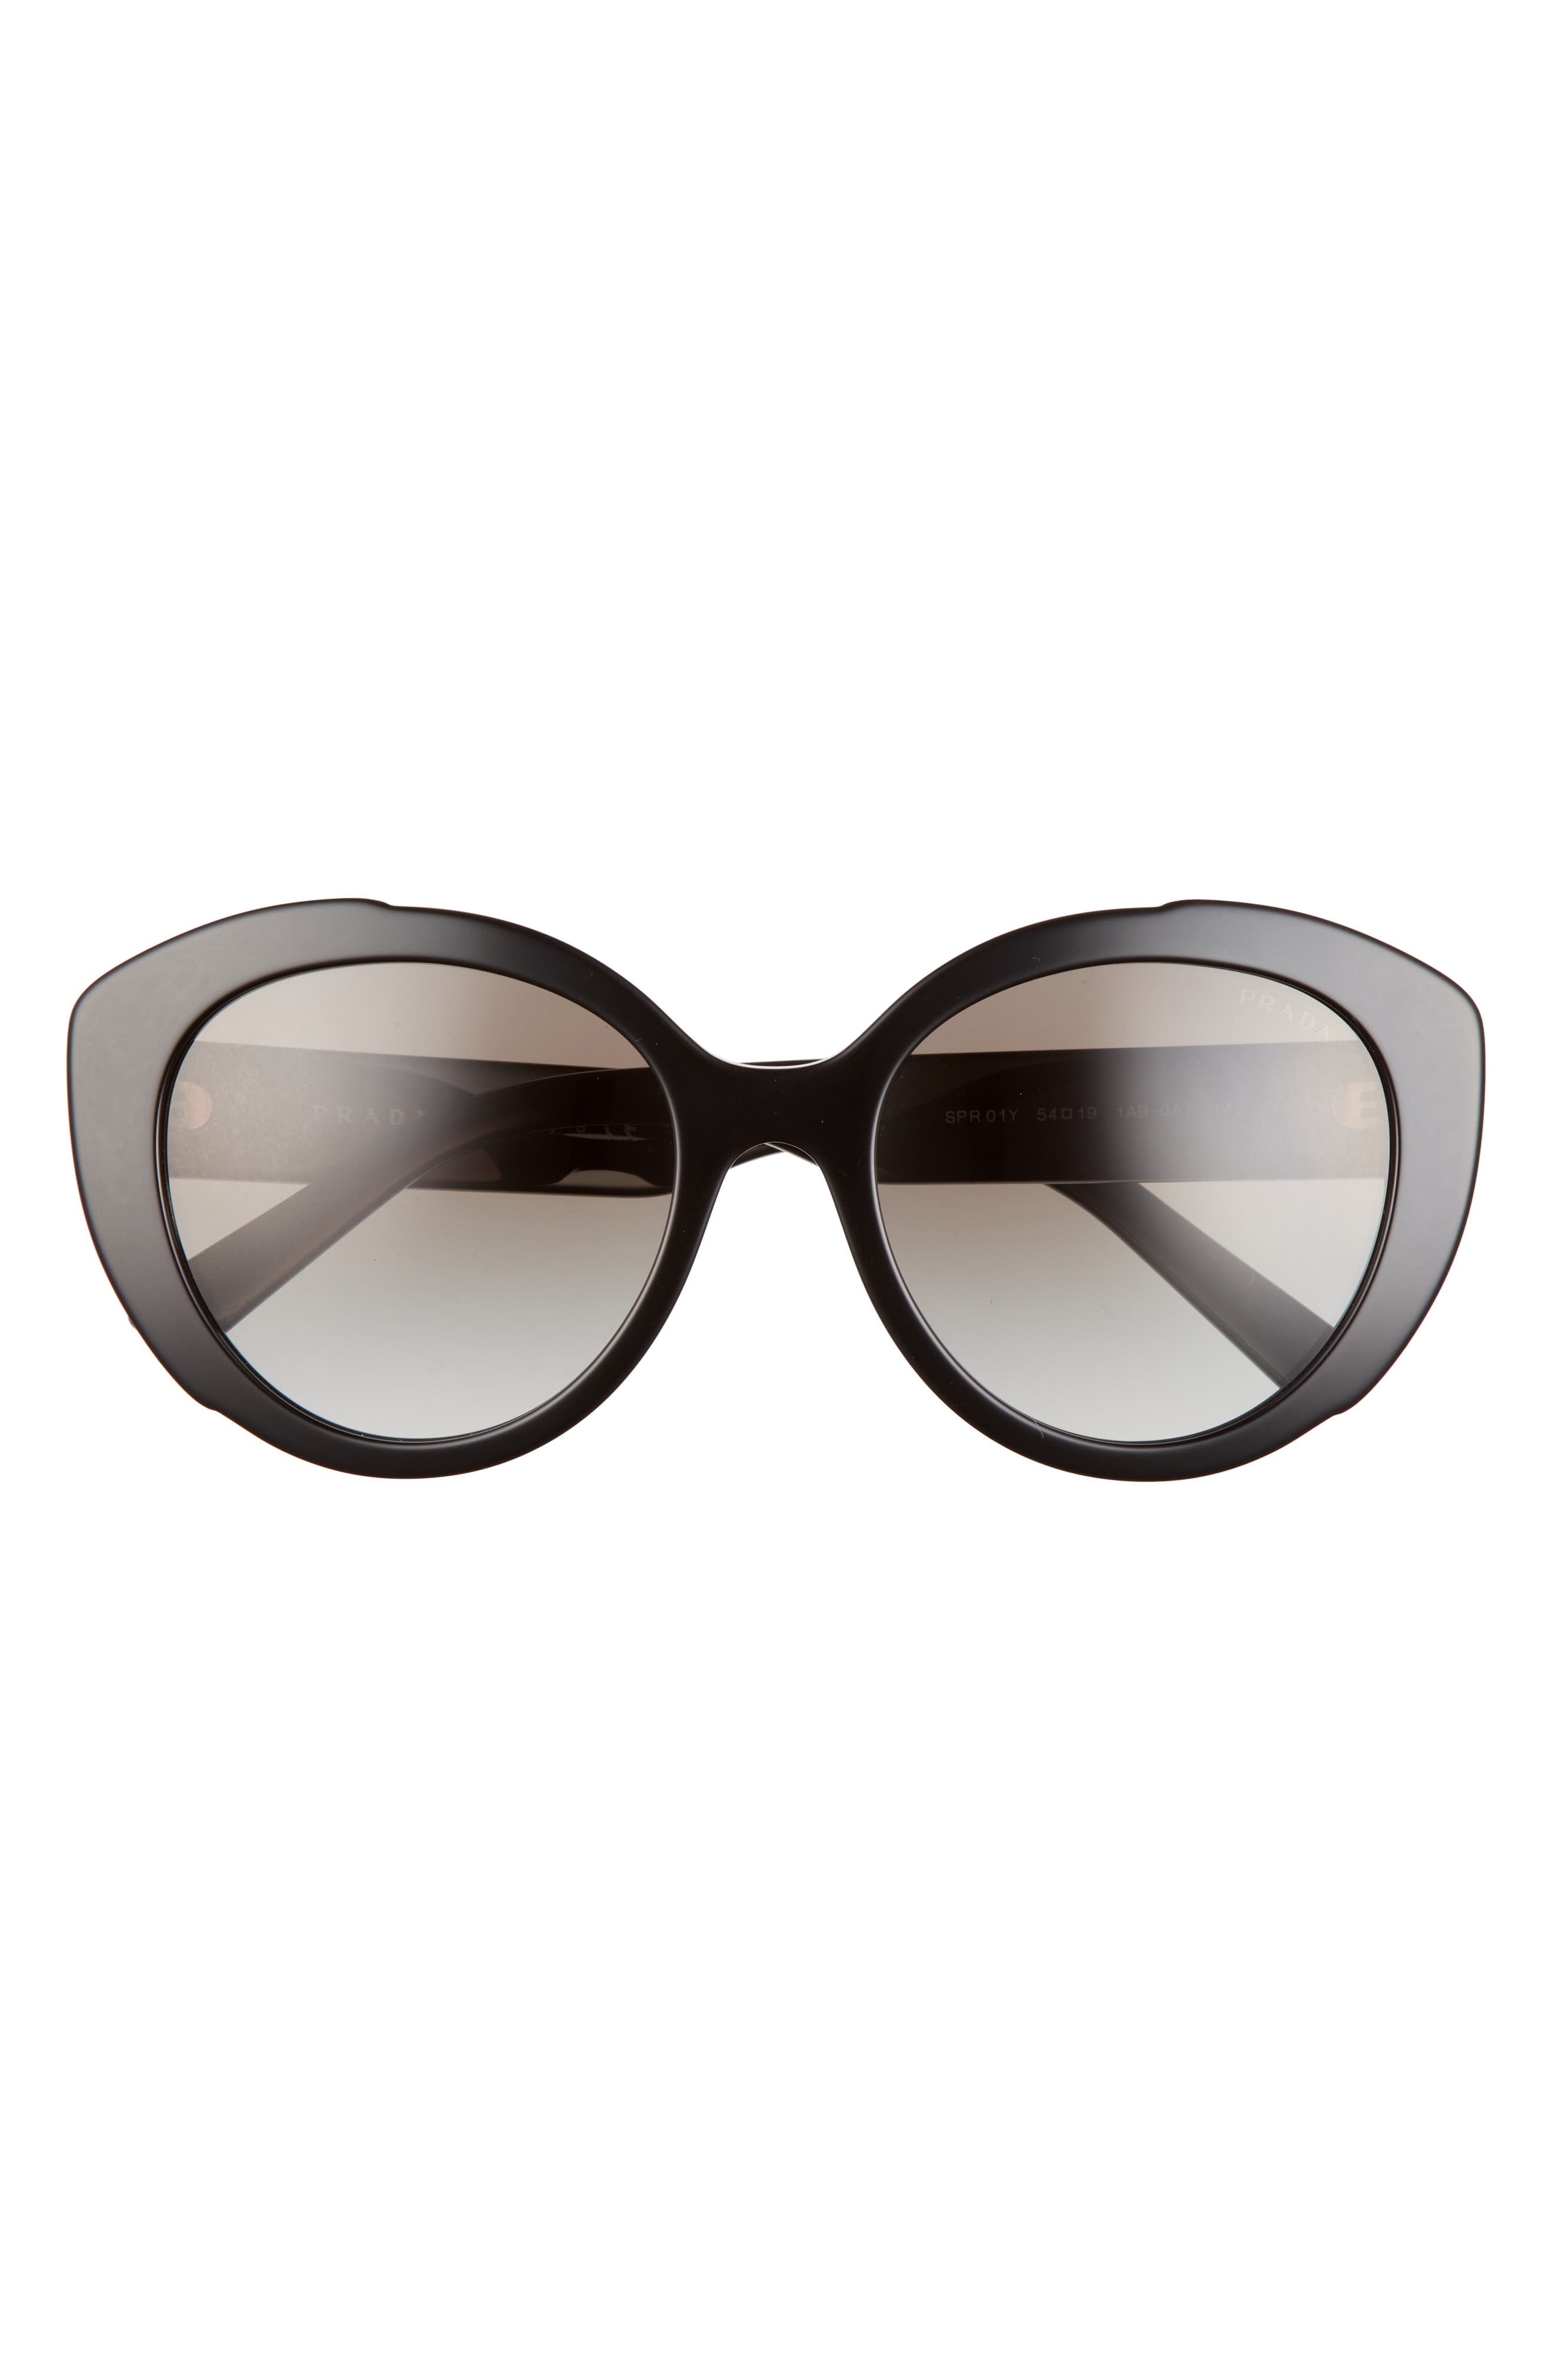 Ipekyol Oval Sunglasses black color gradient casual look Accessories Sunglasses Oval Sunglasses 